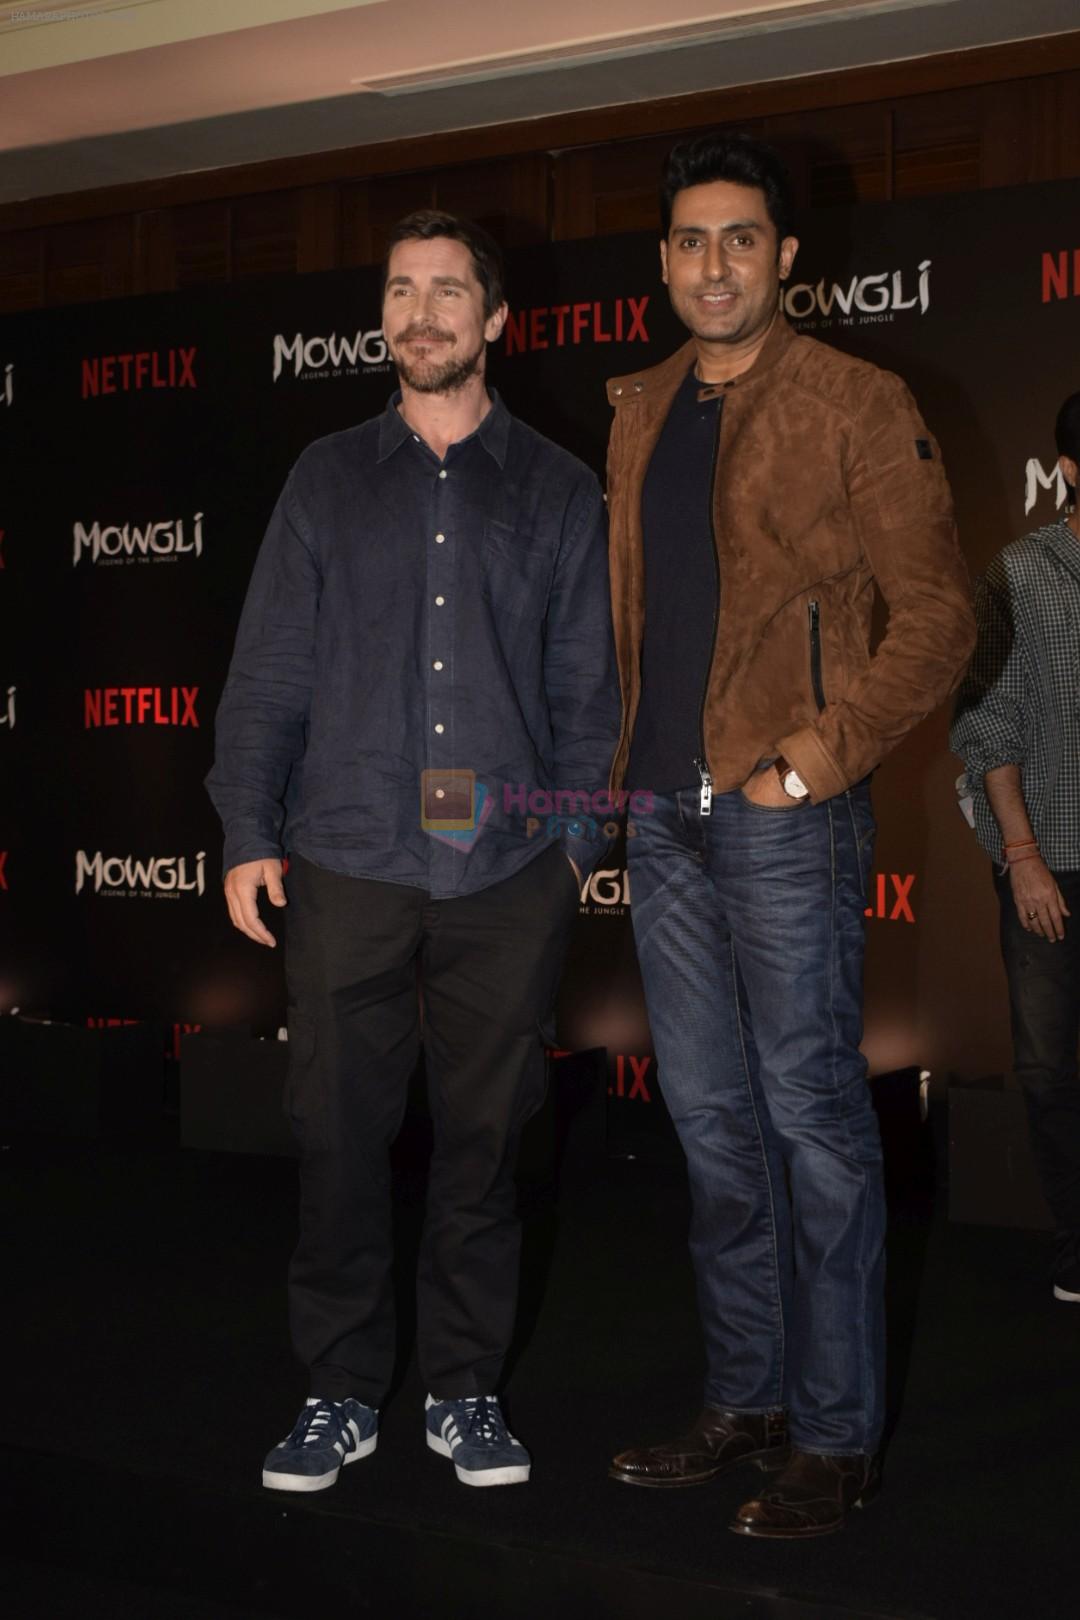 Abhishek Bachchan at the Press conference of Mowgli by Netflix in jw marriott, juhu on 26th Nov 2018